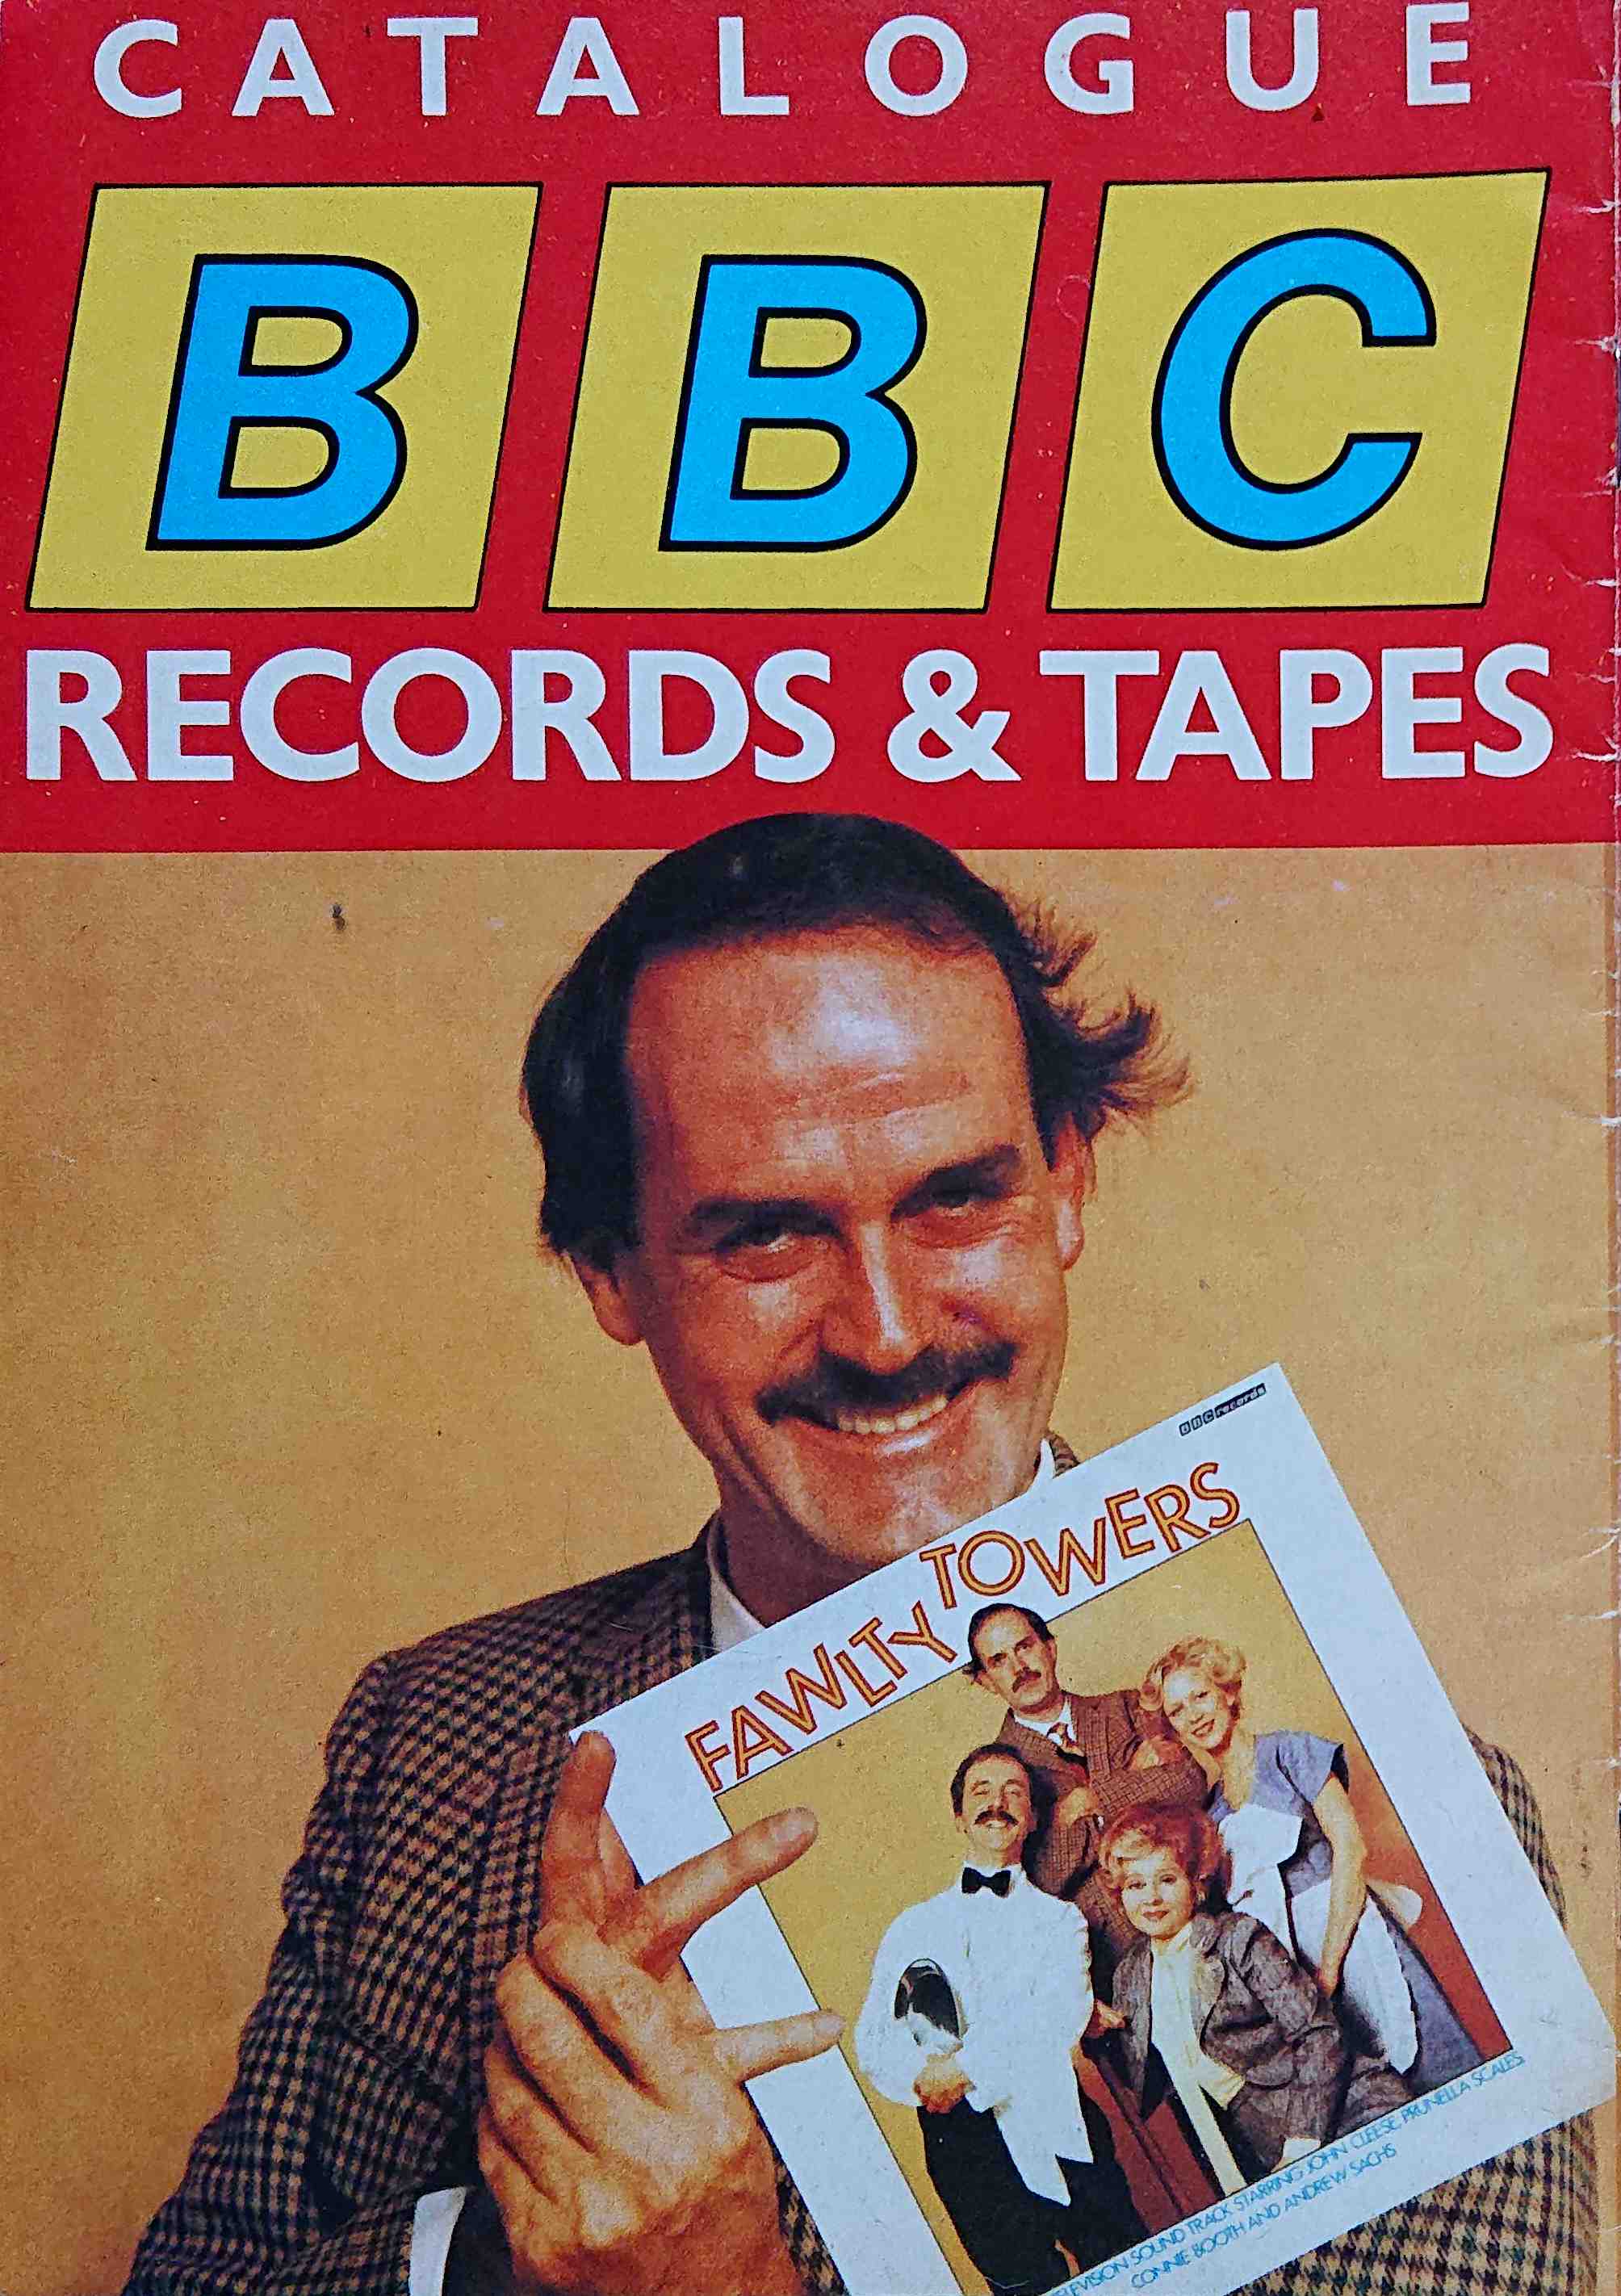 BBC Records catalogue 1980.